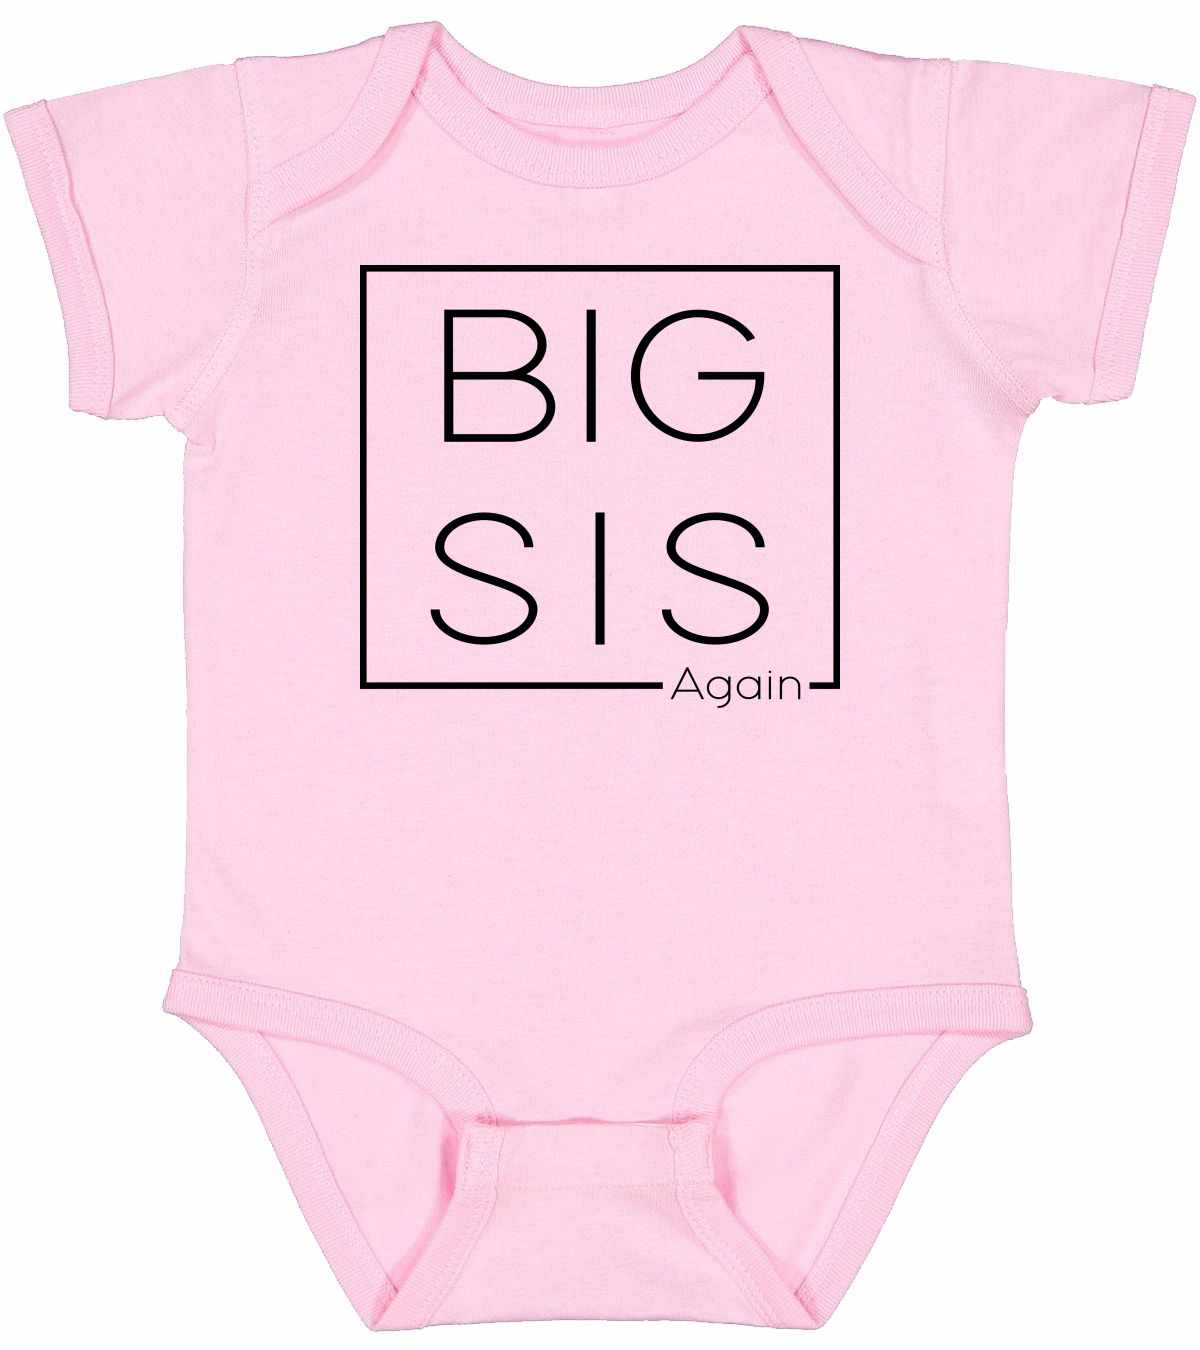 Big Sis Again - Big Sister Boxed on Infant BodySuit